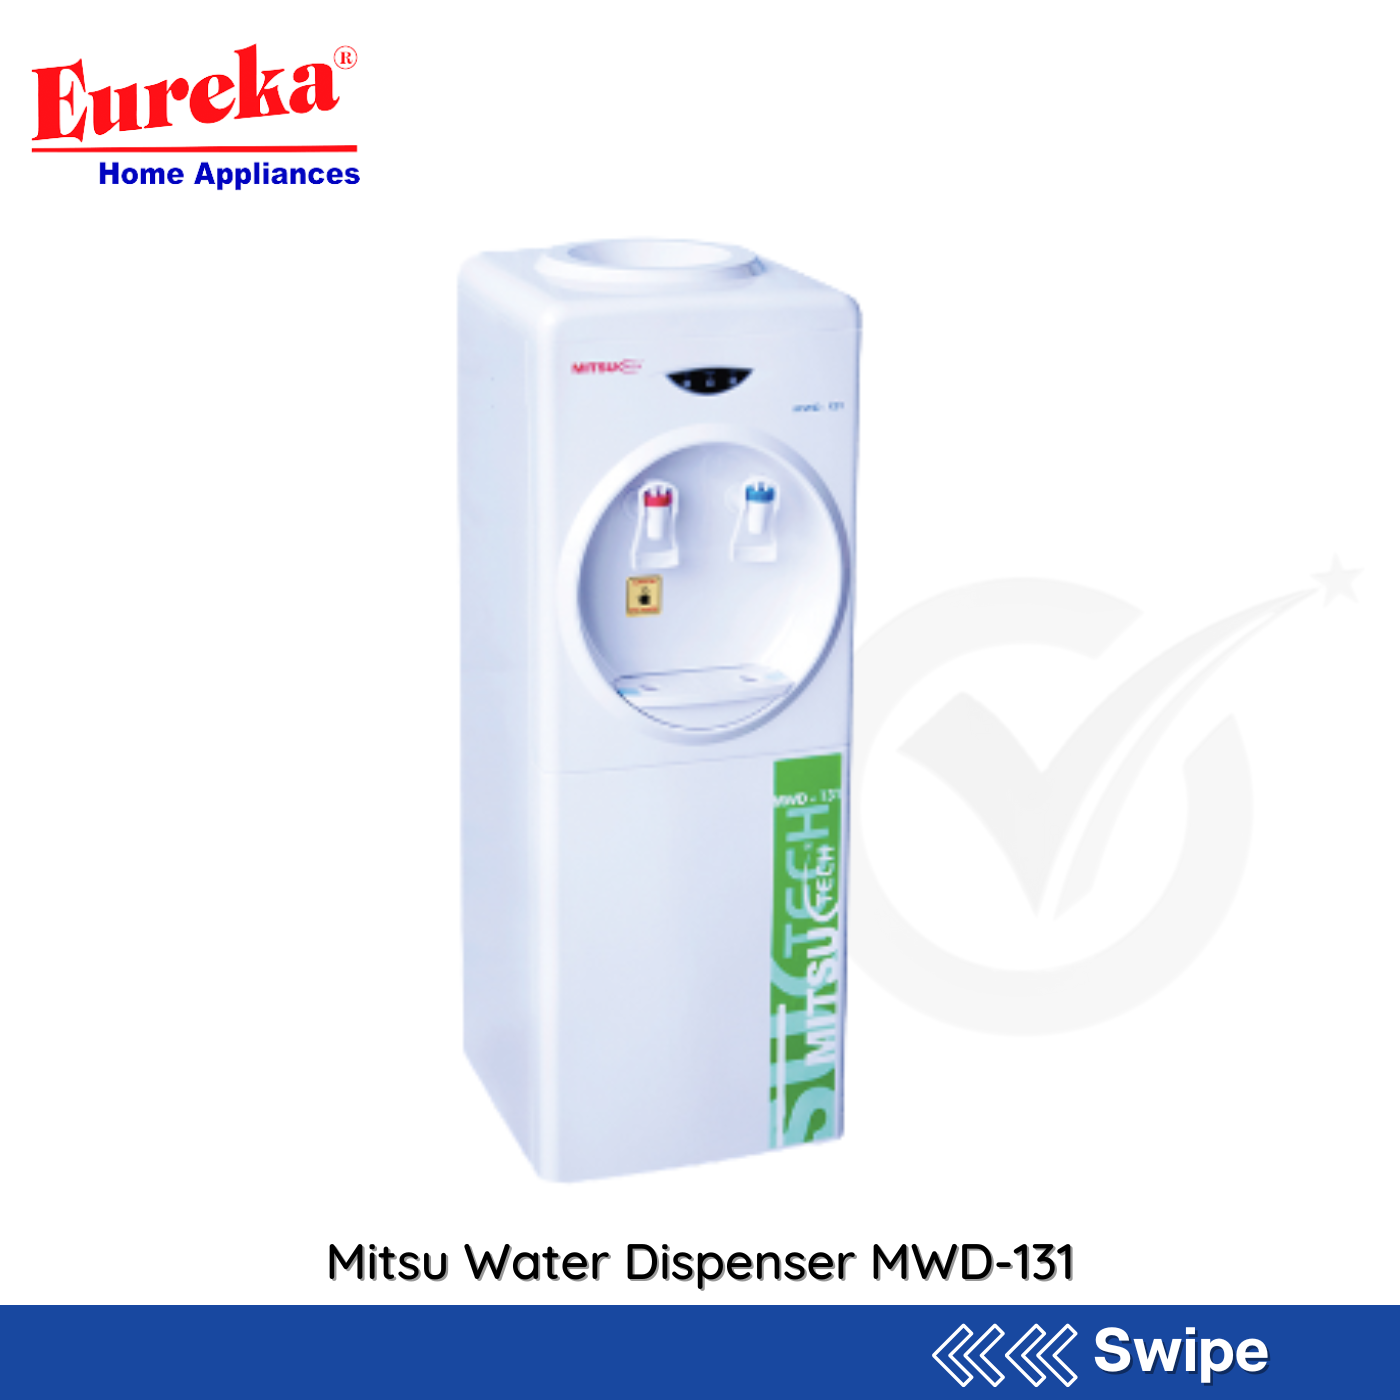 Mitsu Water Dispenser MWD-131